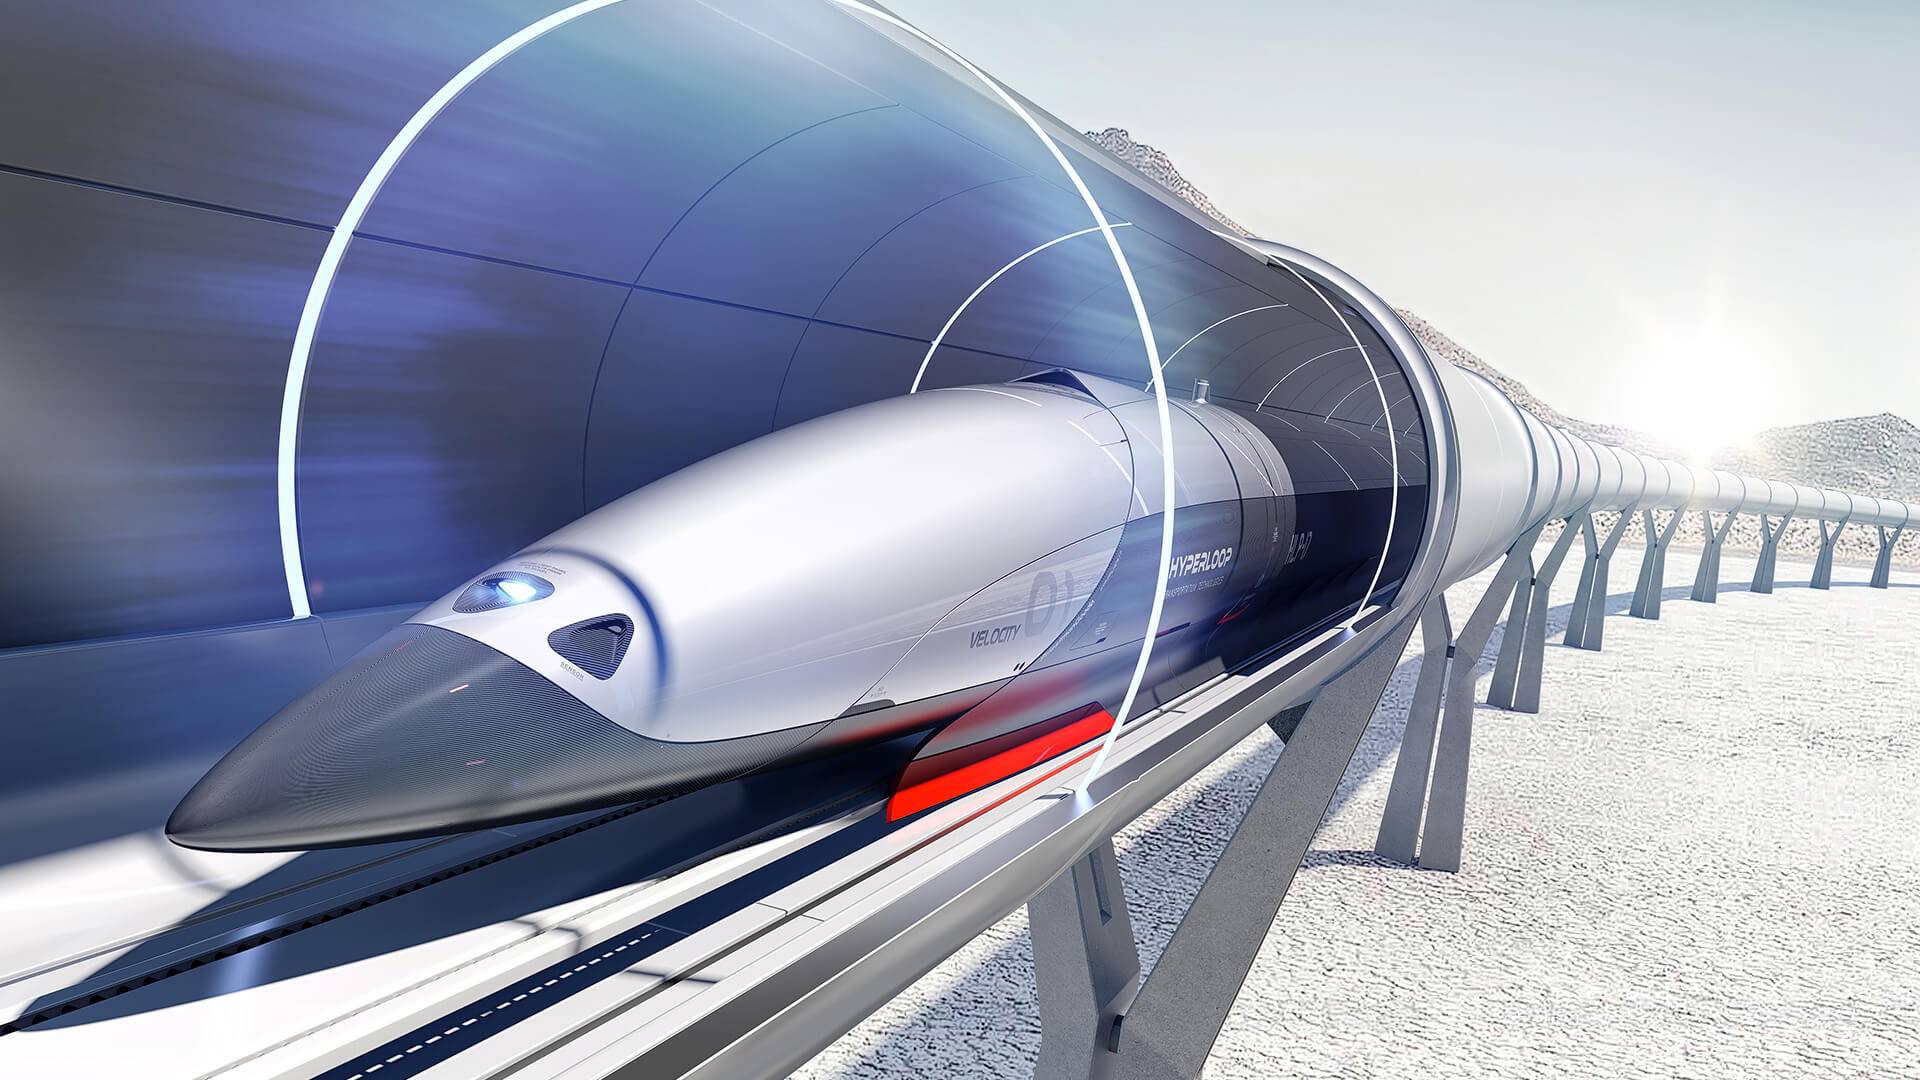 Artist's render of a Hyperloop capsule in its infrastructure